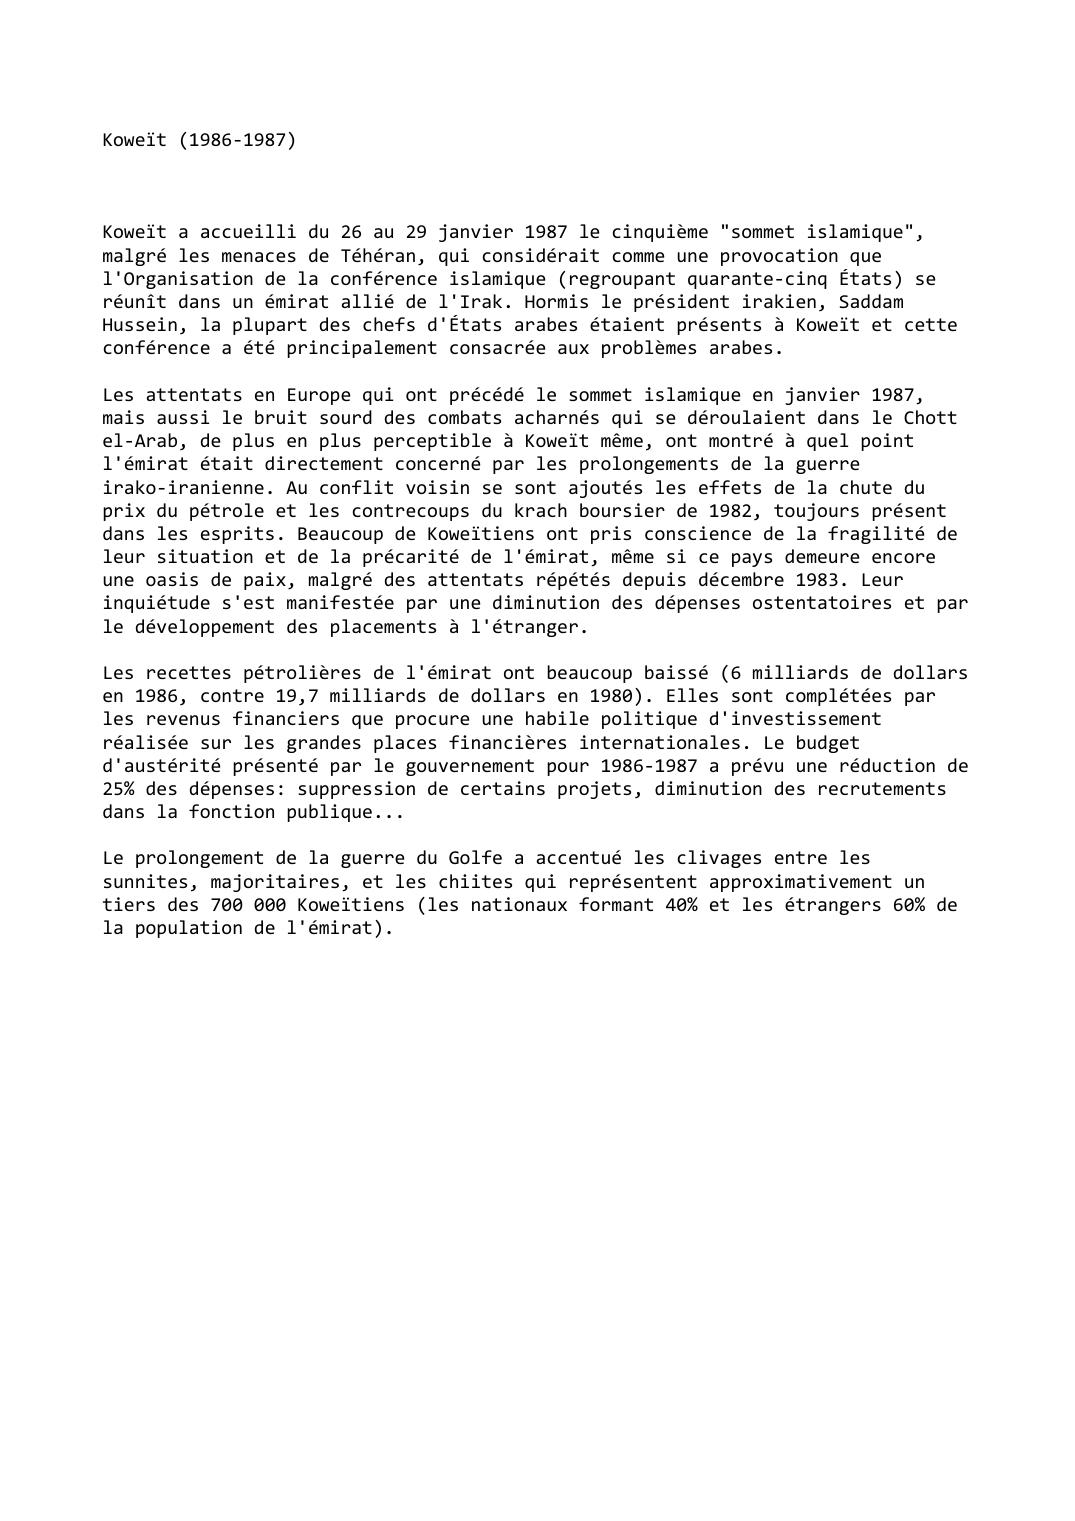 Prévisualisation du document Koweït (1986-1987)